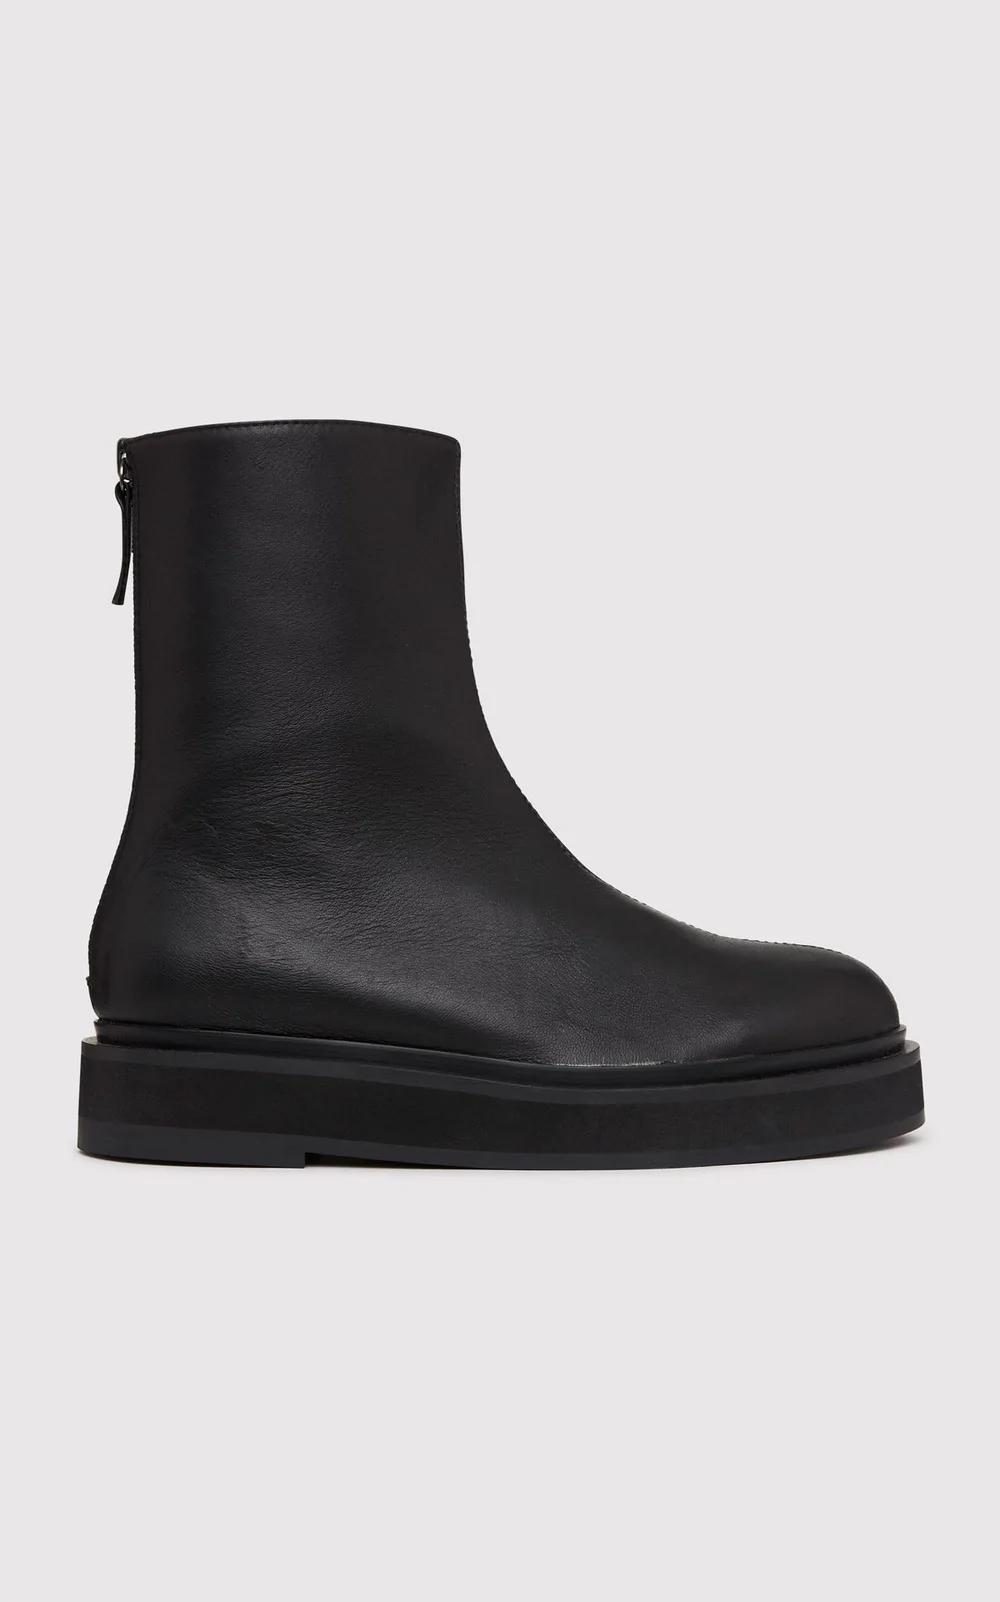 Product Image for Flatform Boot, Black